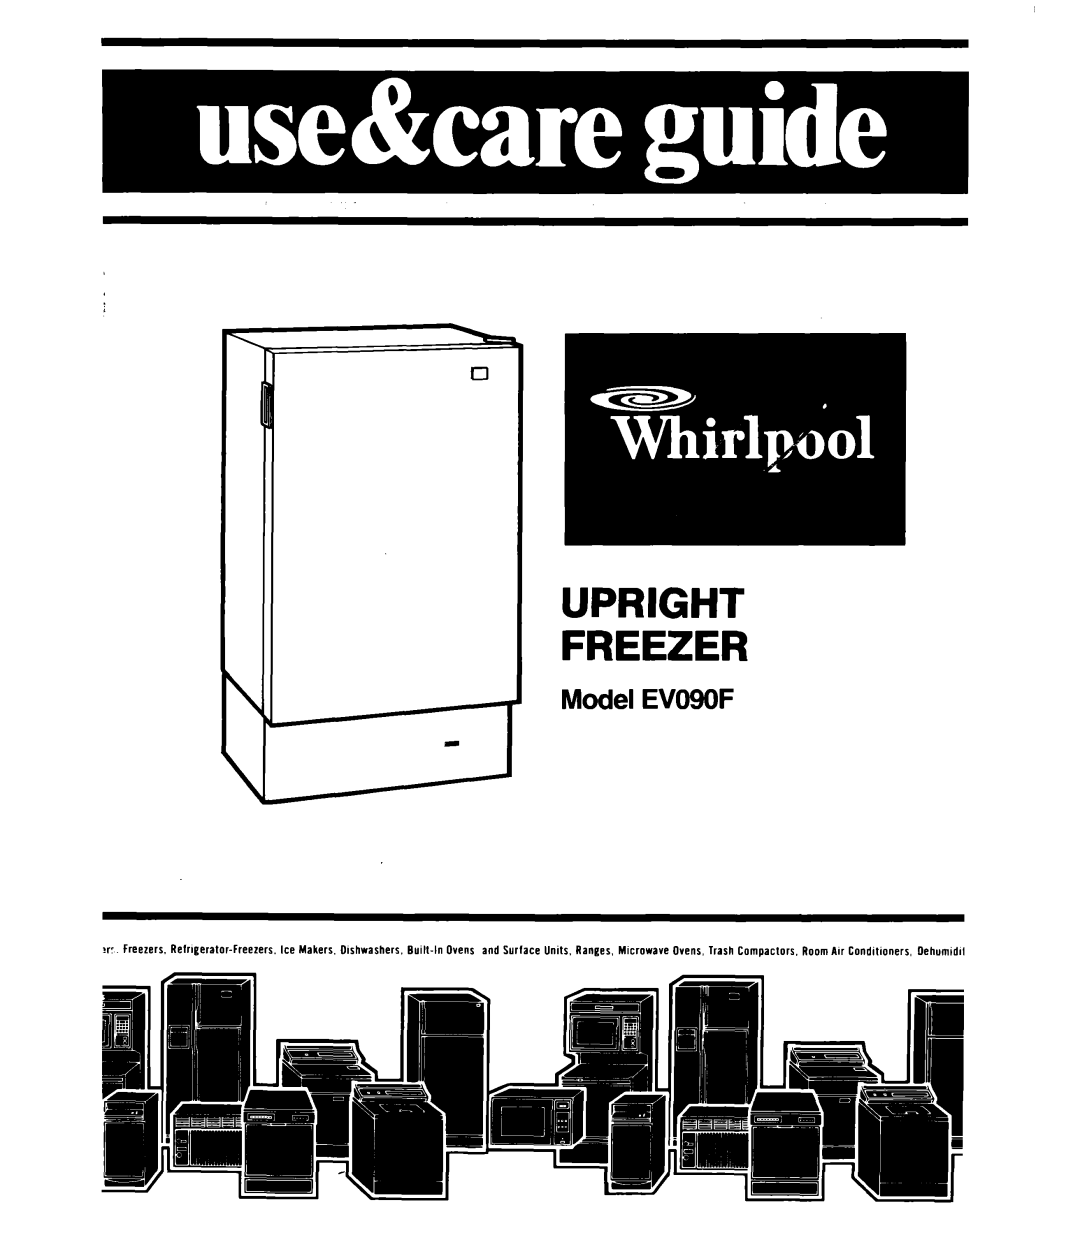 Whirlpool EV090F manual Upright Freezer, Model EVO9OF 